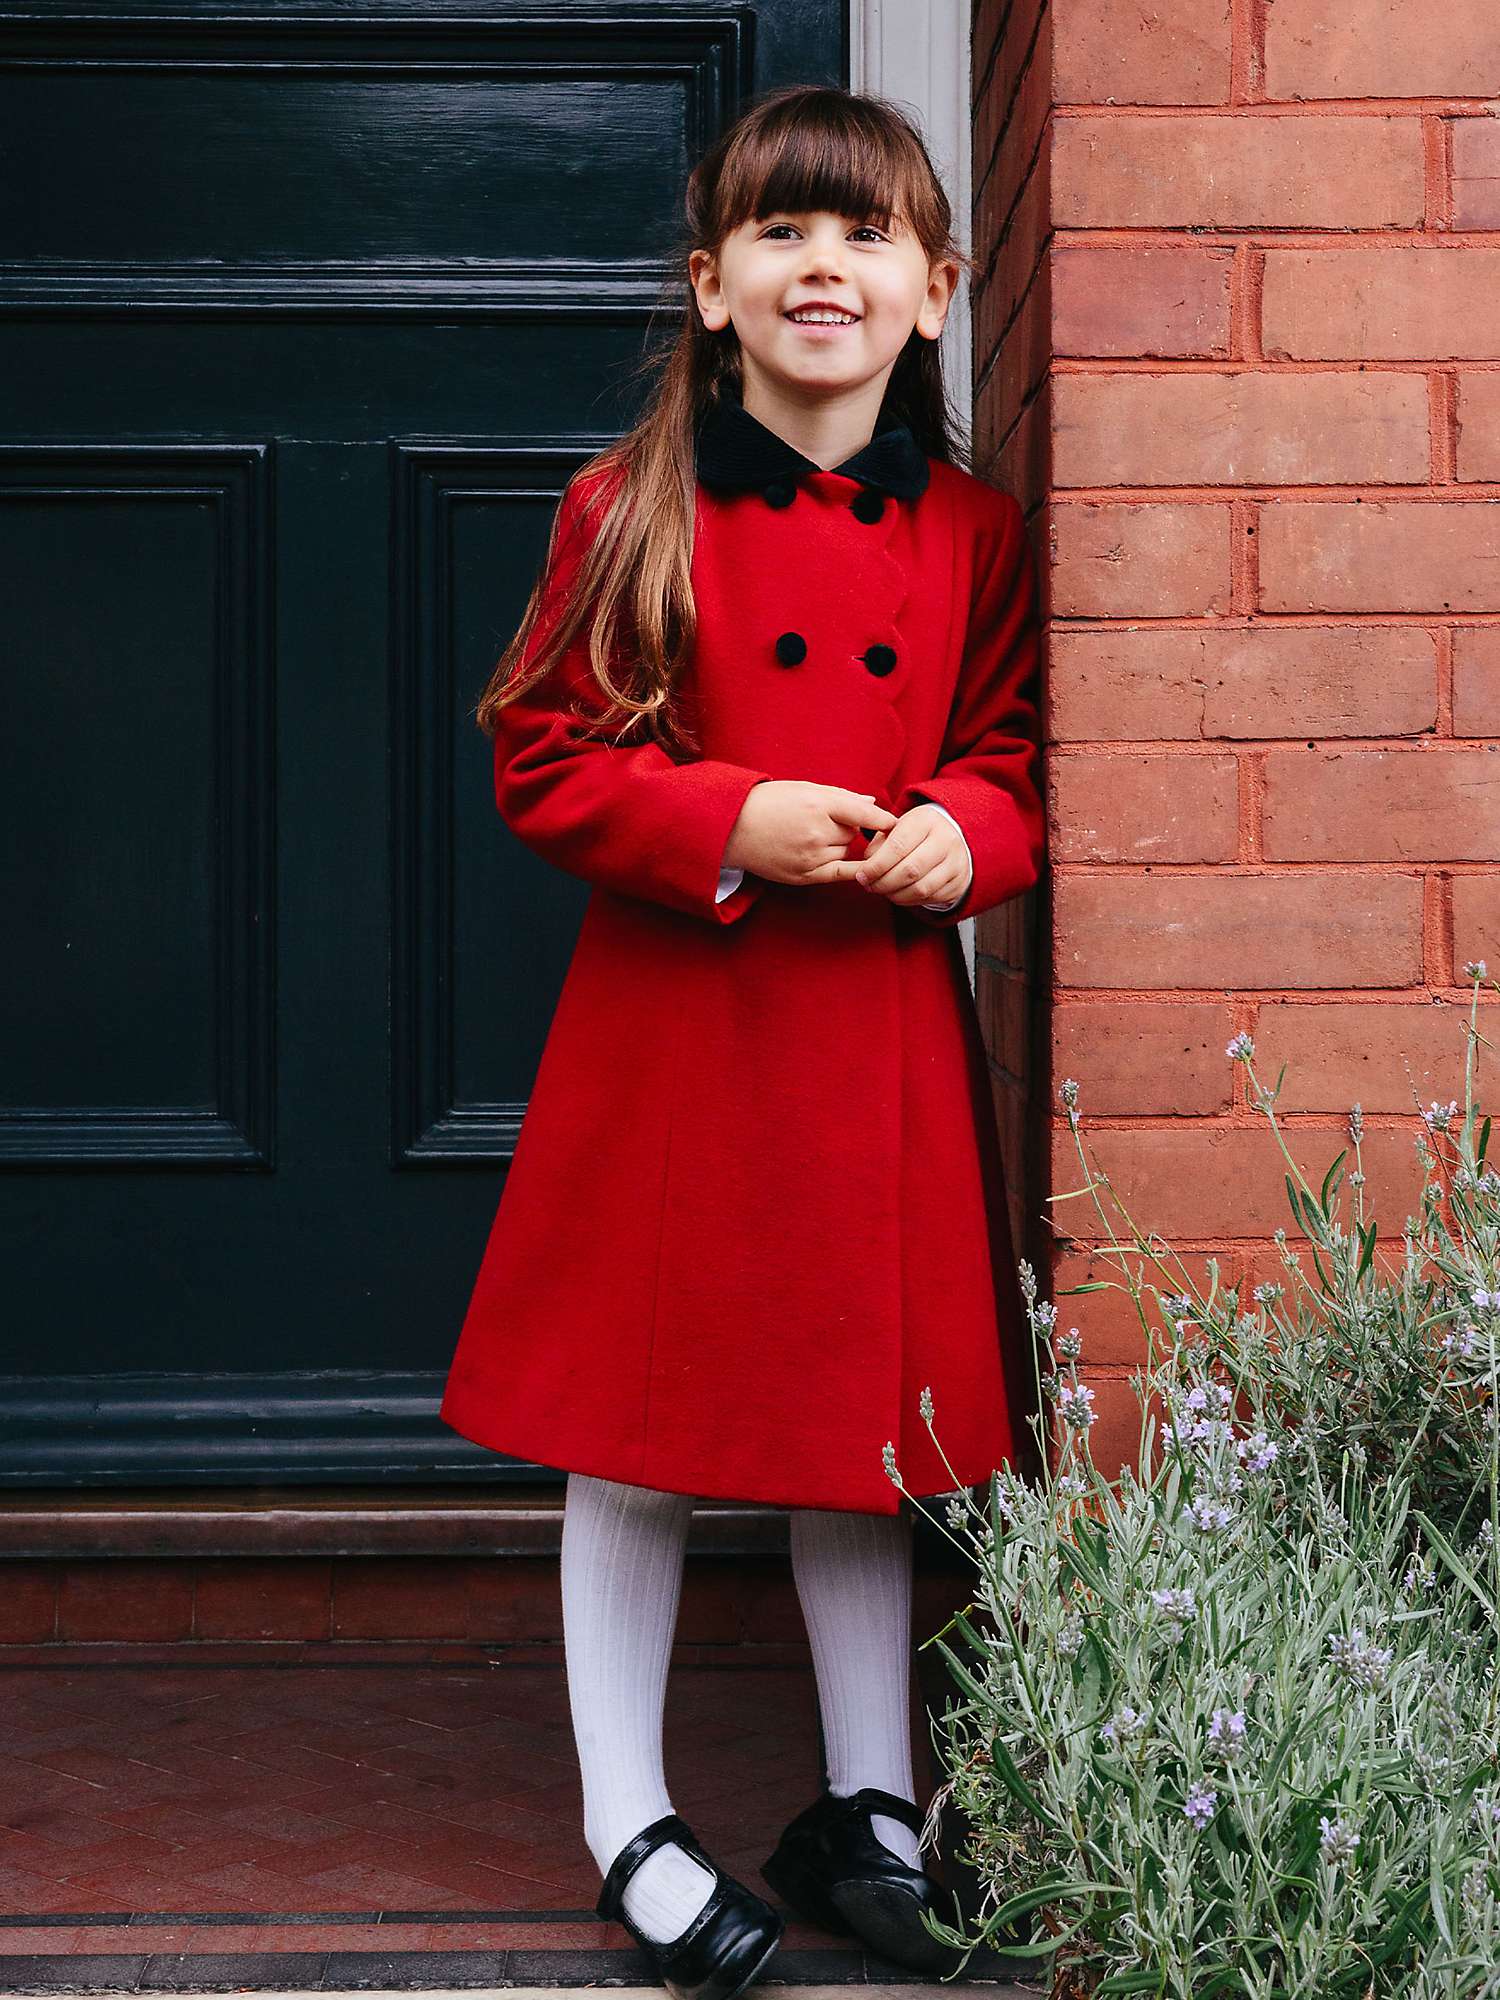 Buy Trotters Heritage Kids' Scallop Edge Wool Coat, Red Online at johnlewis.com